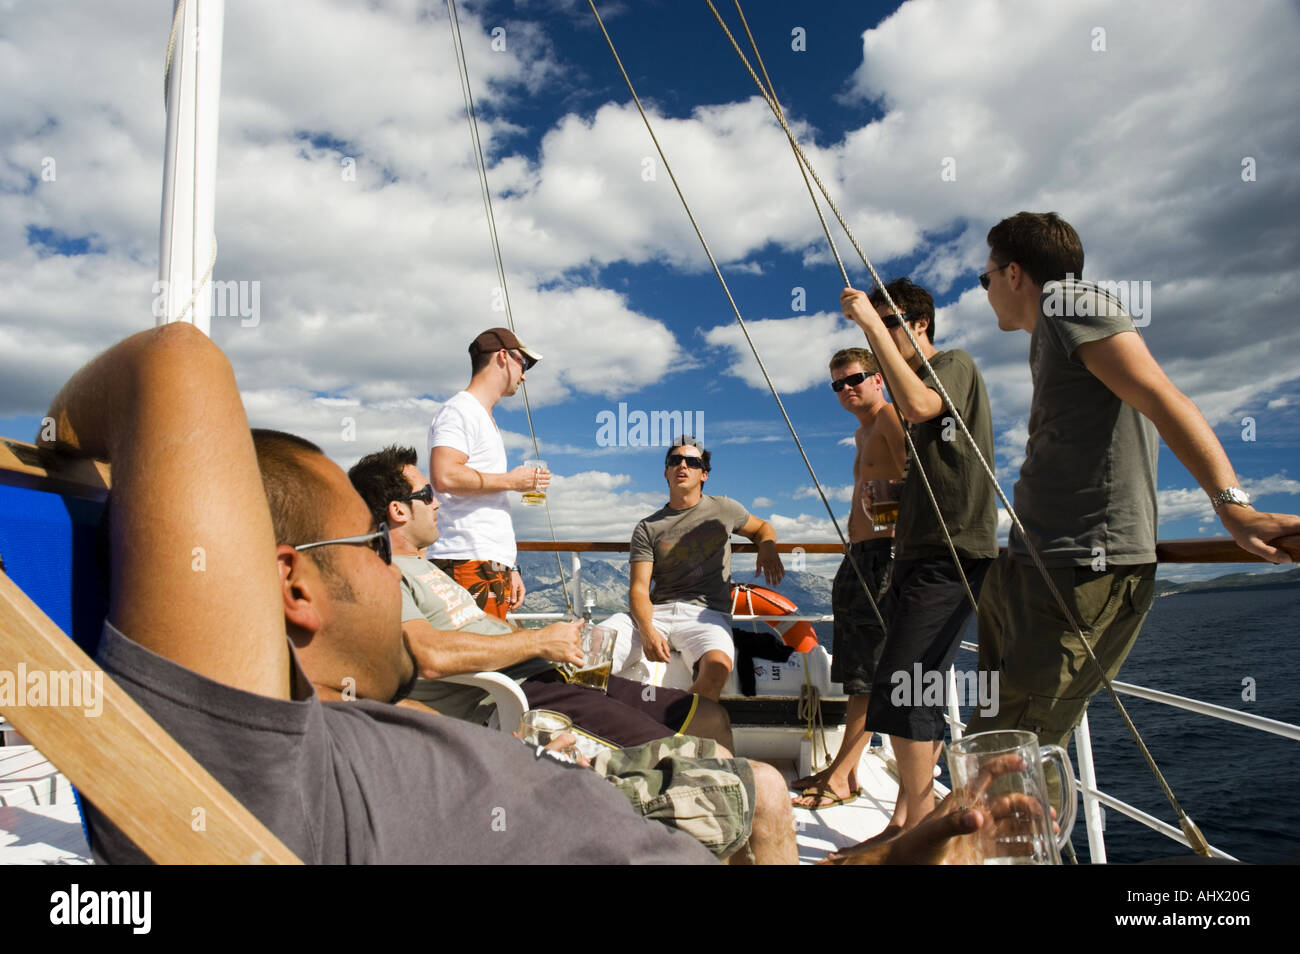 Holidayers enjoy the Croatian sunshine aboard the Penelopa motor cruiser during a Sail Croatia trip. Stock Photo